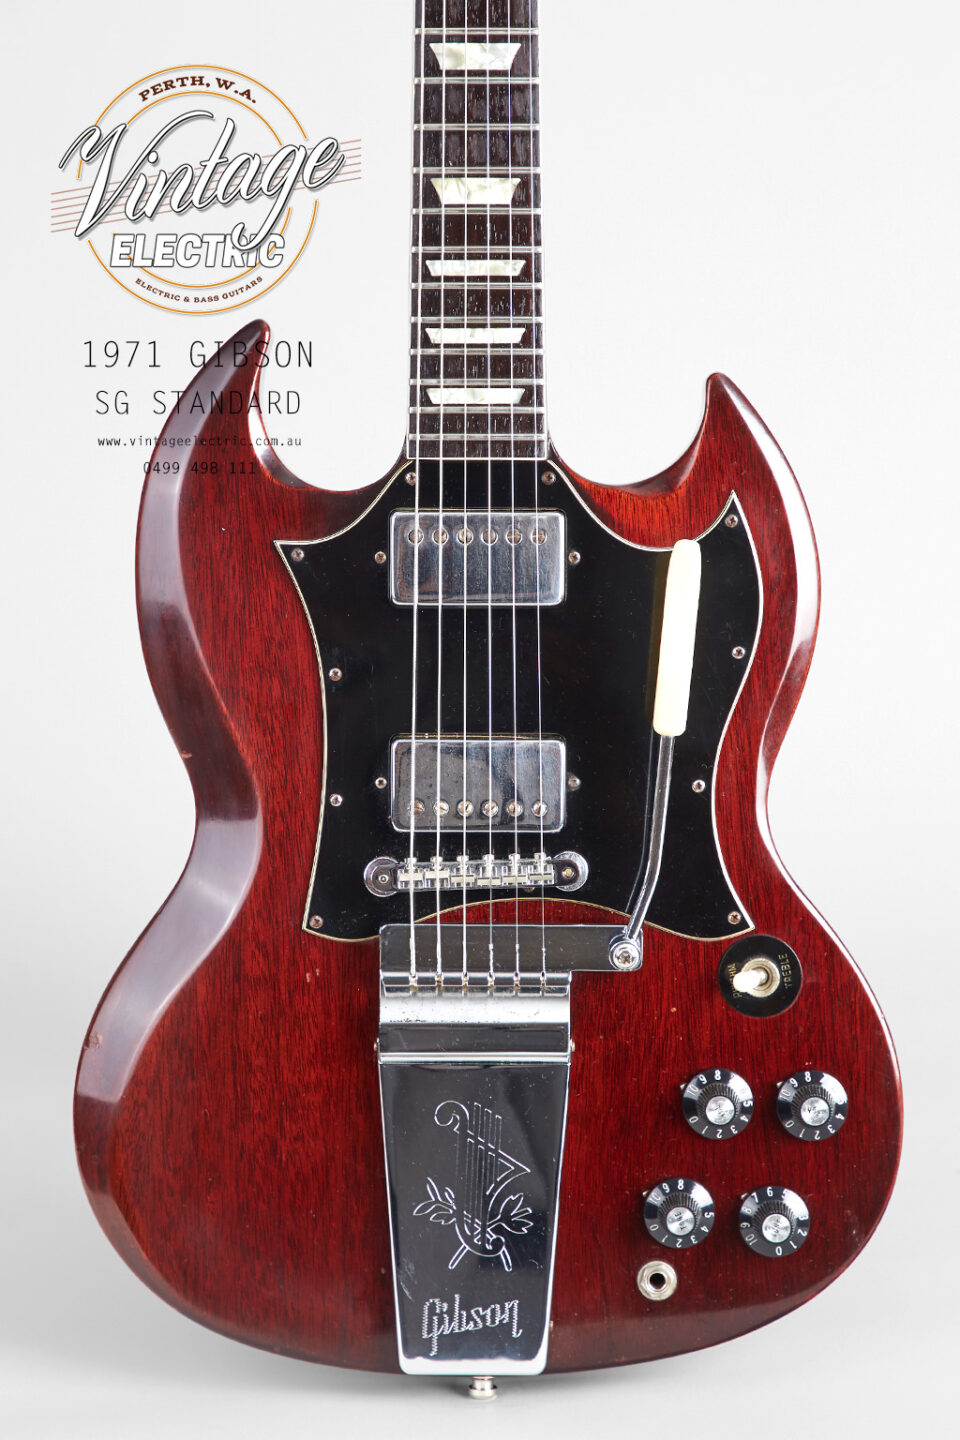 1971 Gibson SG Standard Body